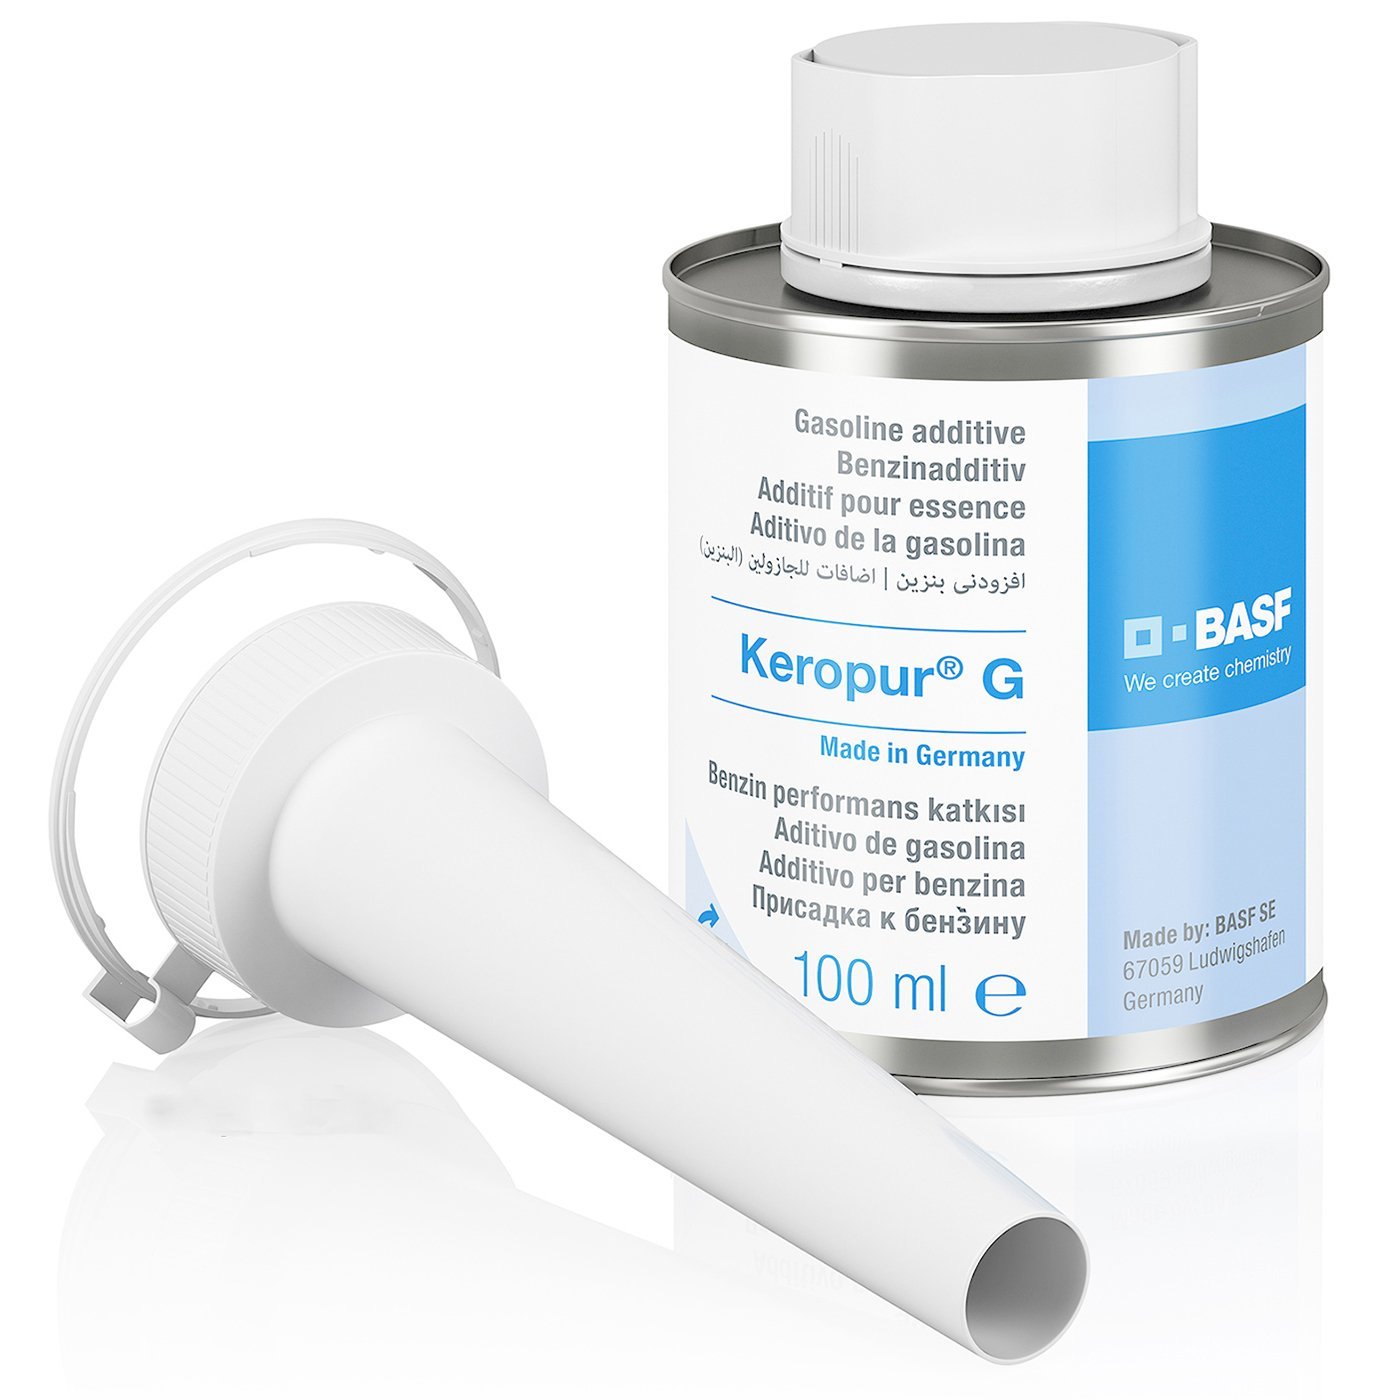 KEROPUR® G - The High Performance Gasoline Additive